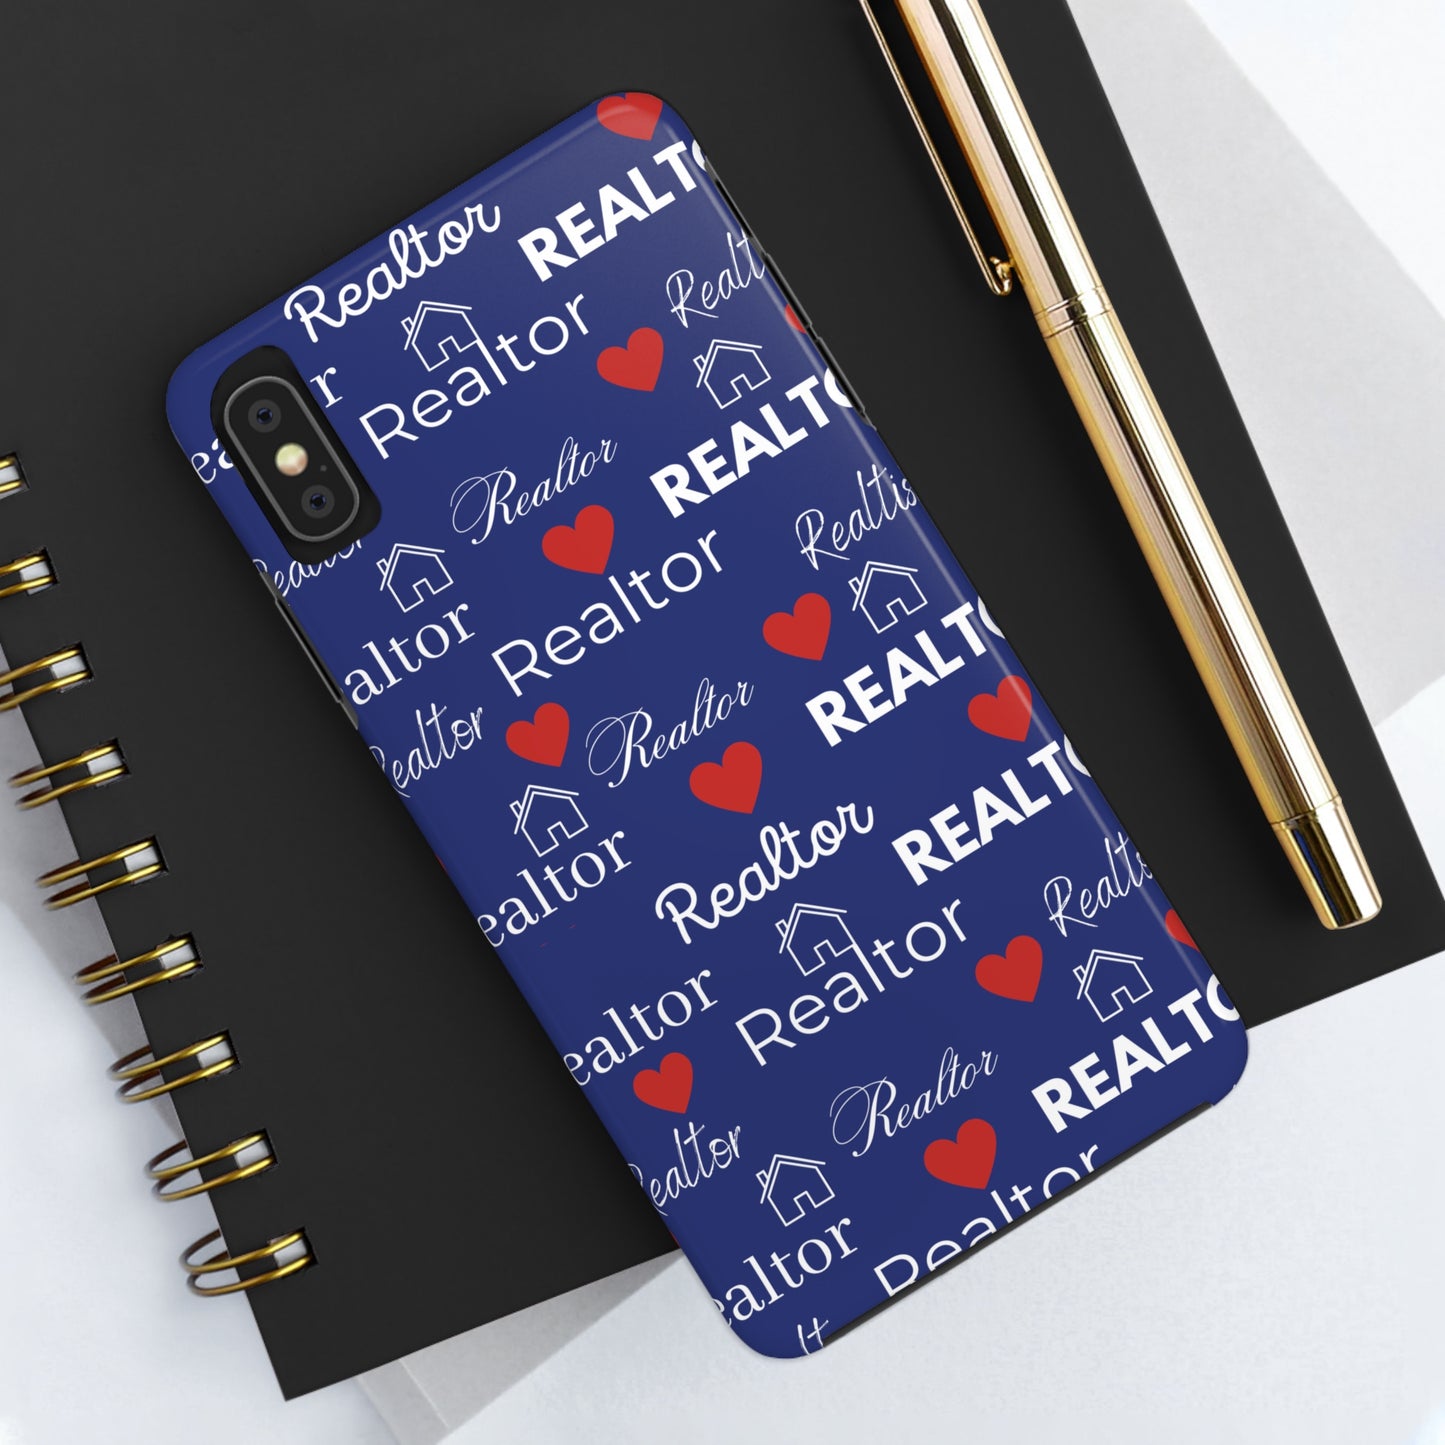 Love It - Realtor Tough Phone Cases